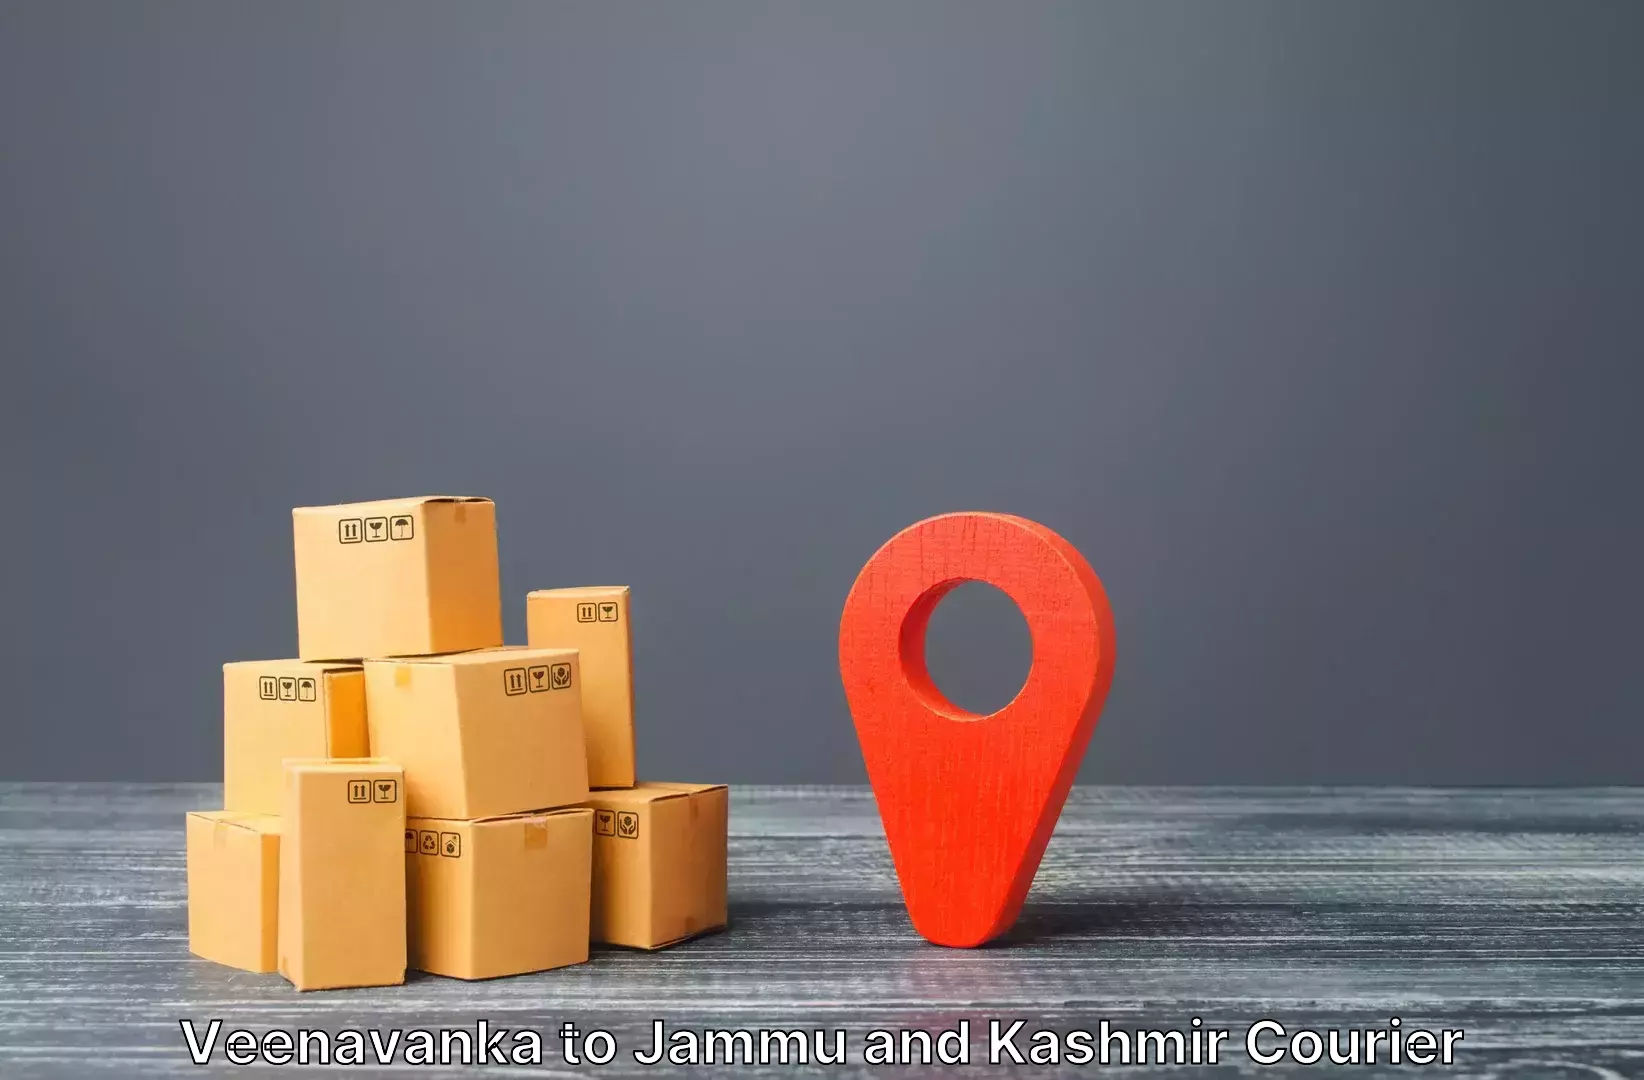 Luggage storage and delivery Veenavanka to Jammu and Kashmir